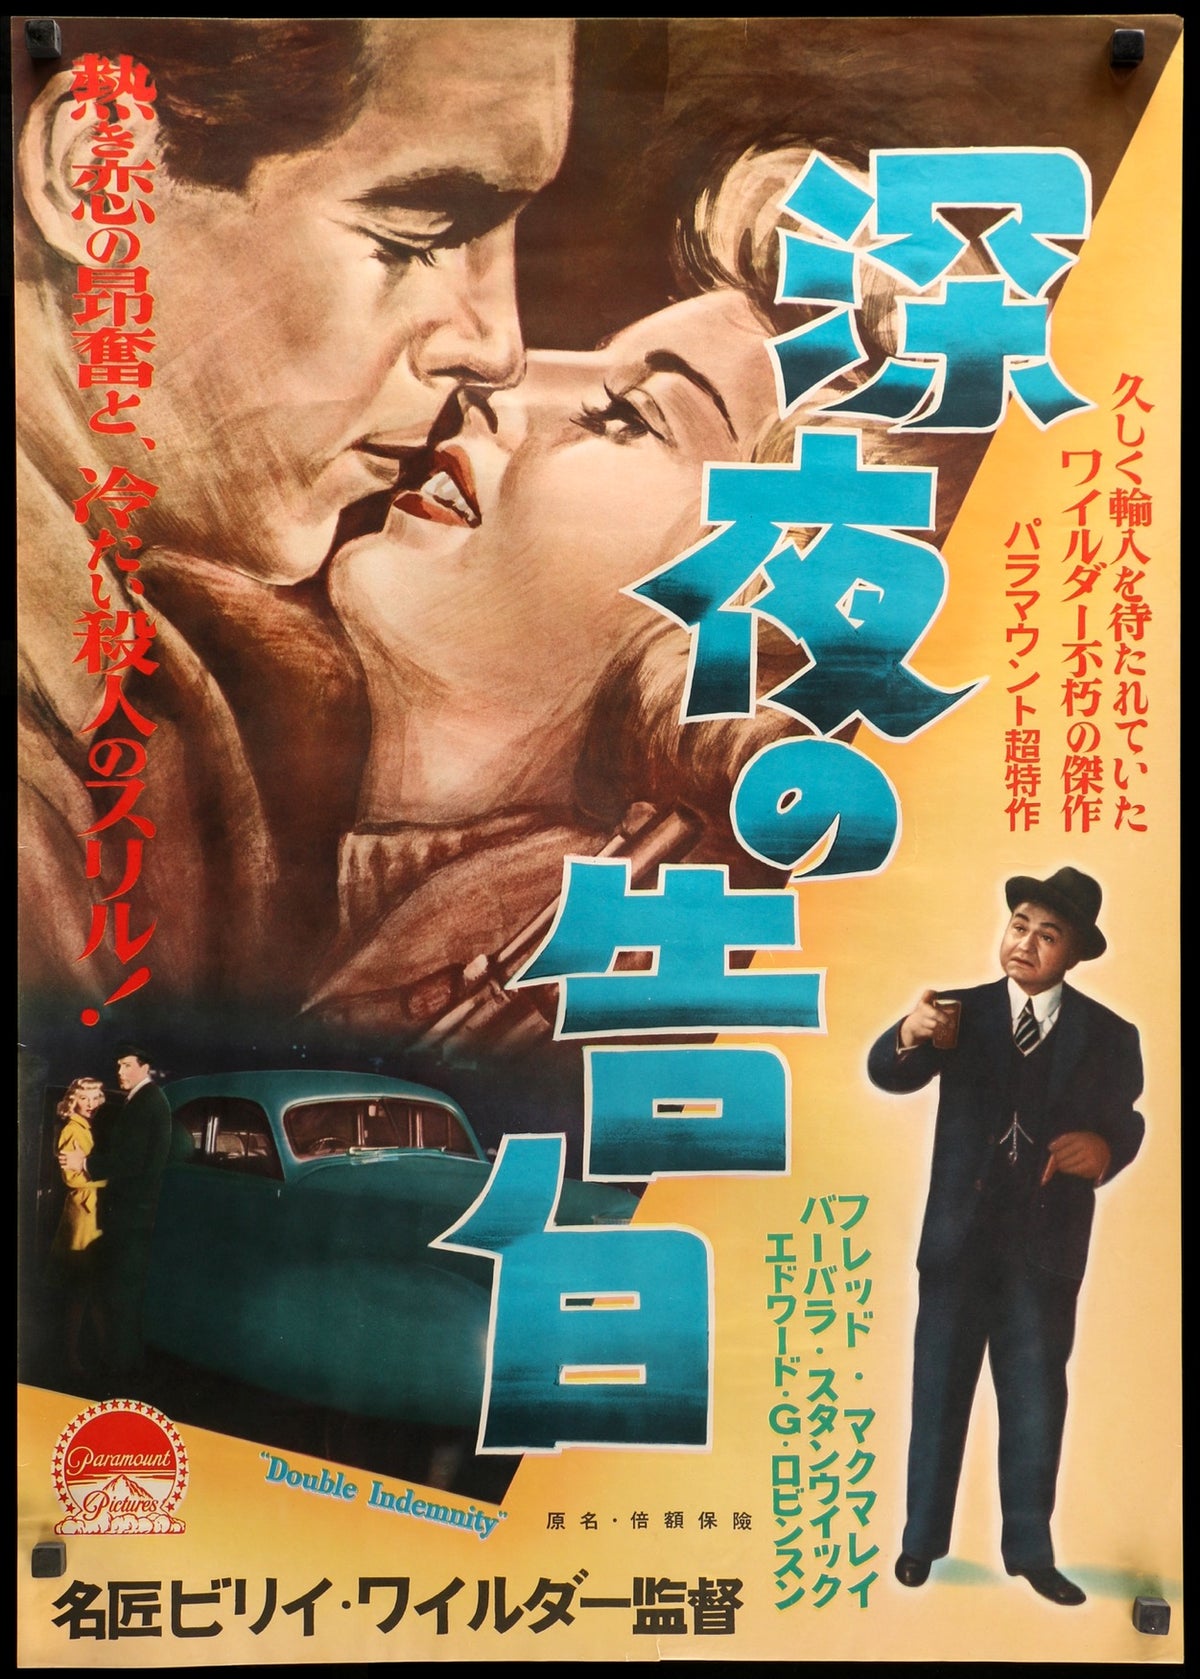 Double Indemnity (1944) original movie poster for sale at Original Film Art